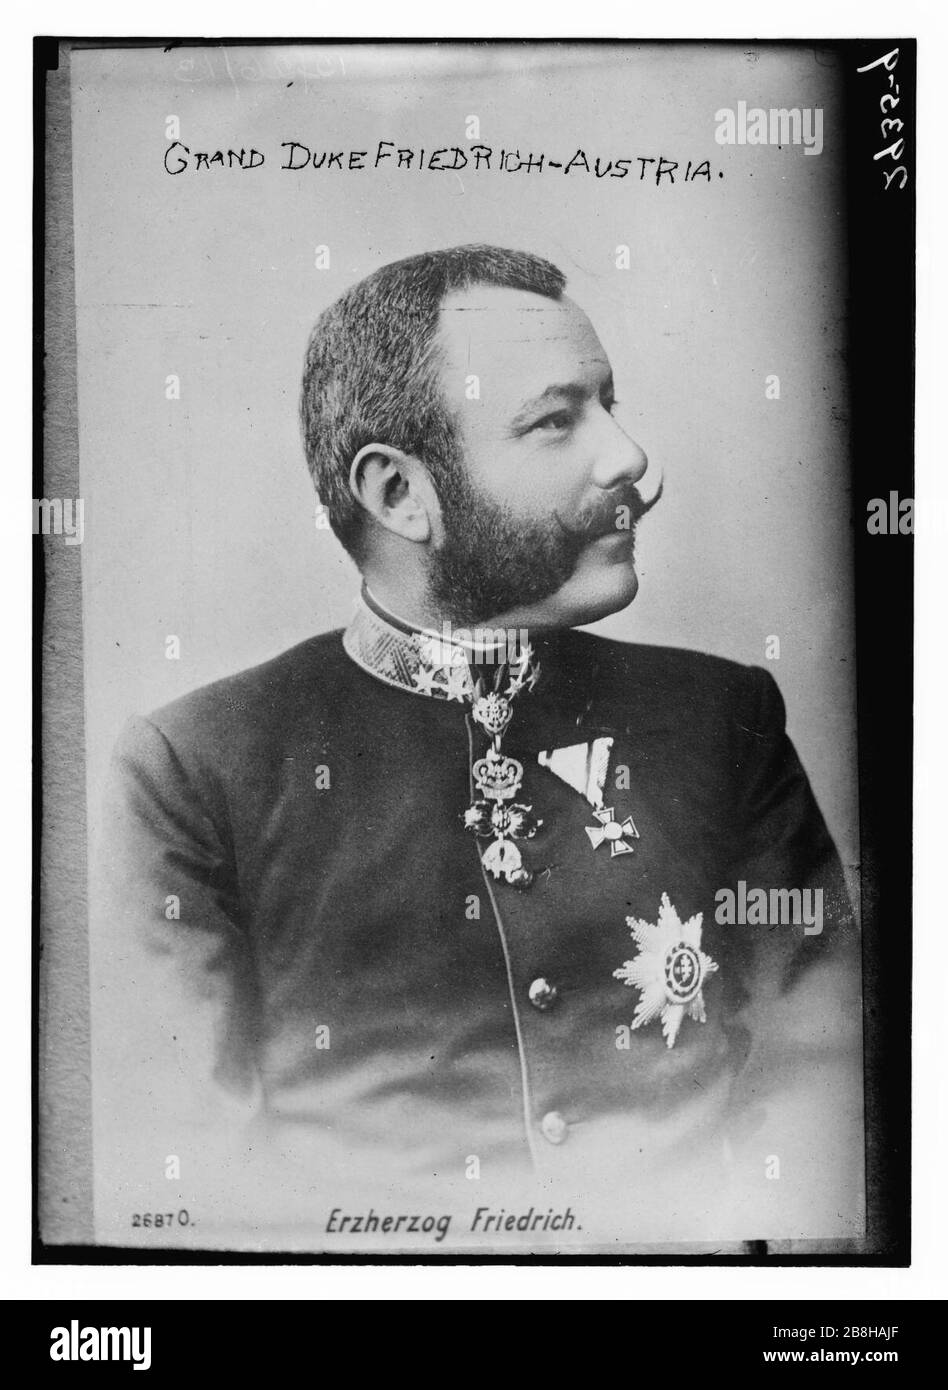 Grand Duke Friedrich - Austria Stock Photo